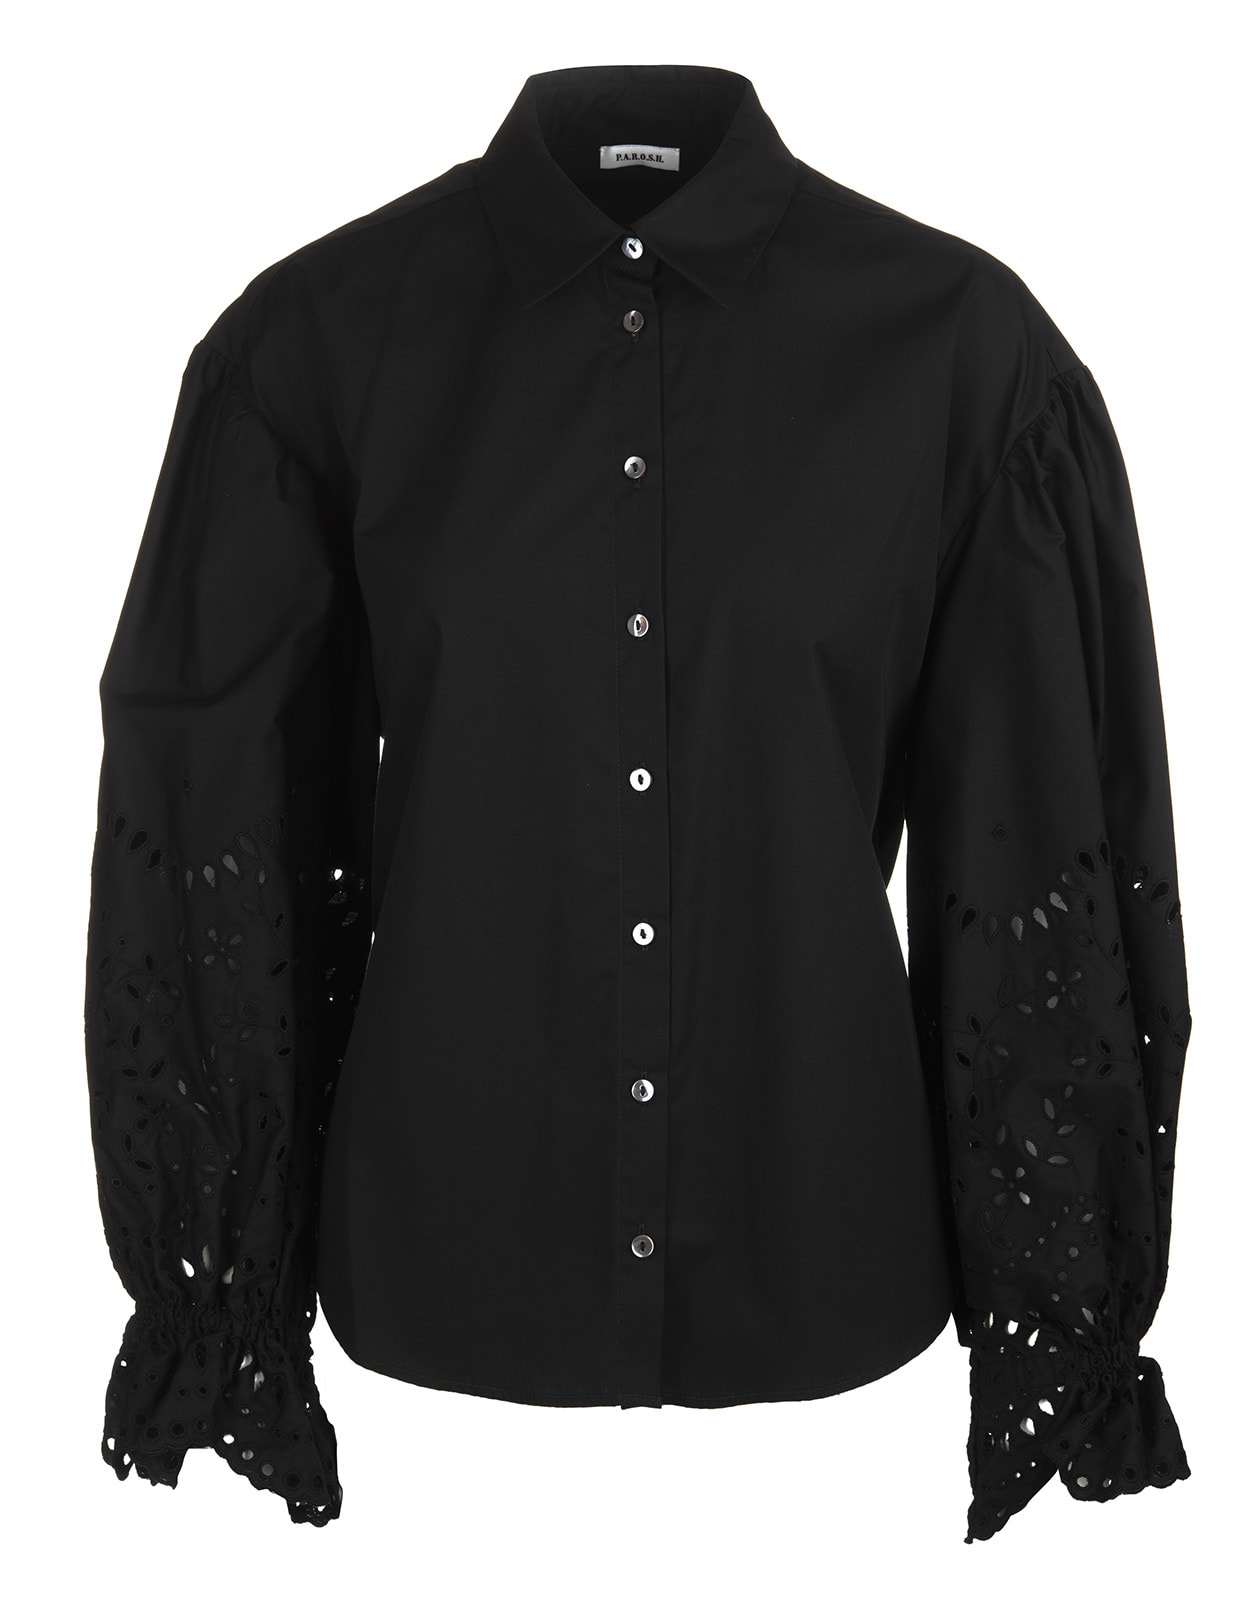 Parosh Black Broderie-anglaise Shirt